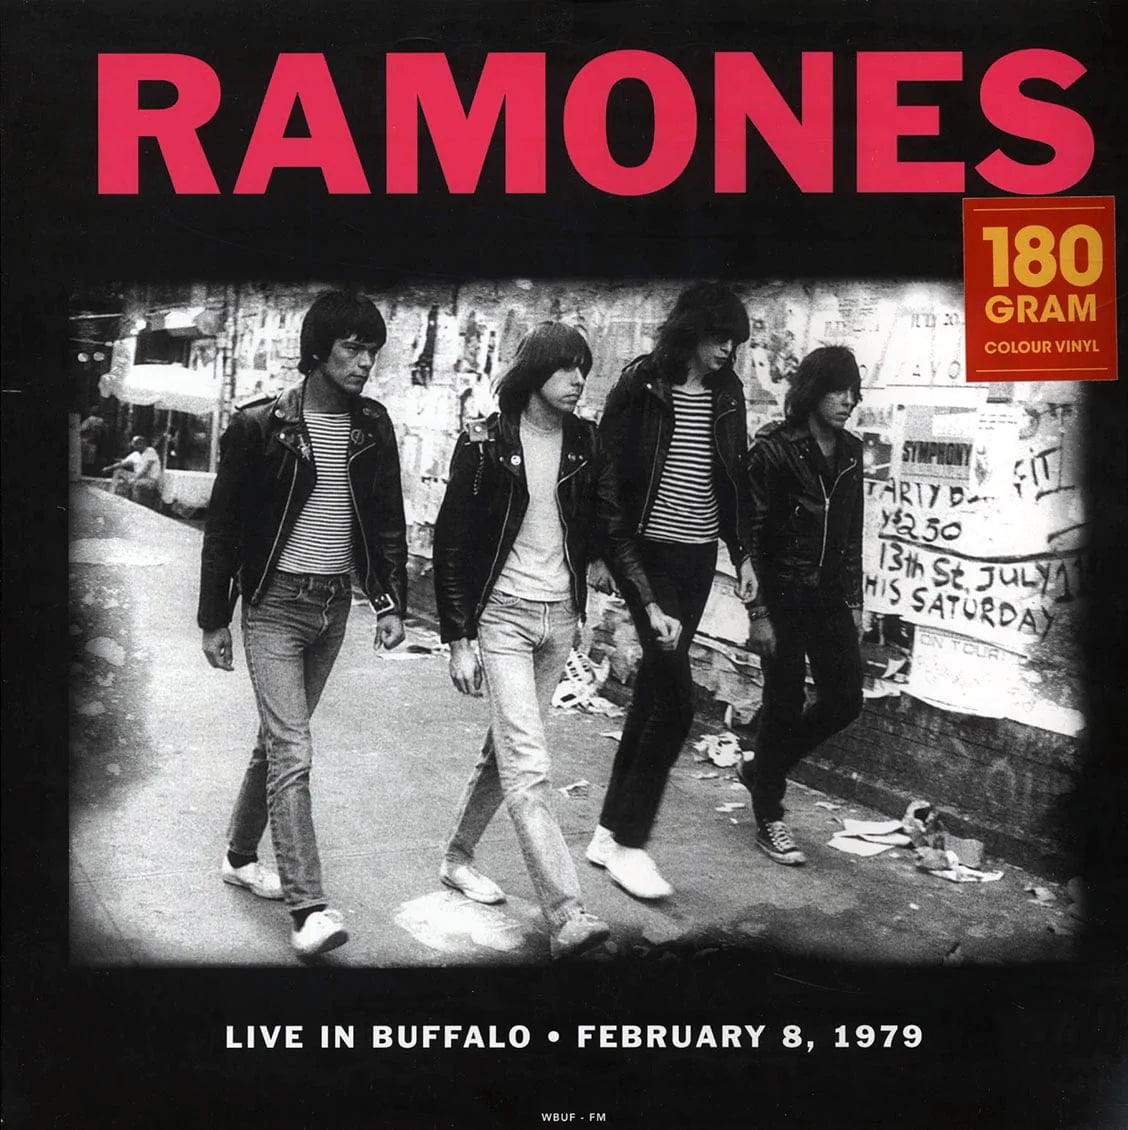 RAMONES: Live in Buffalo • February 8, 1979 LP (180 gram color vinyl)